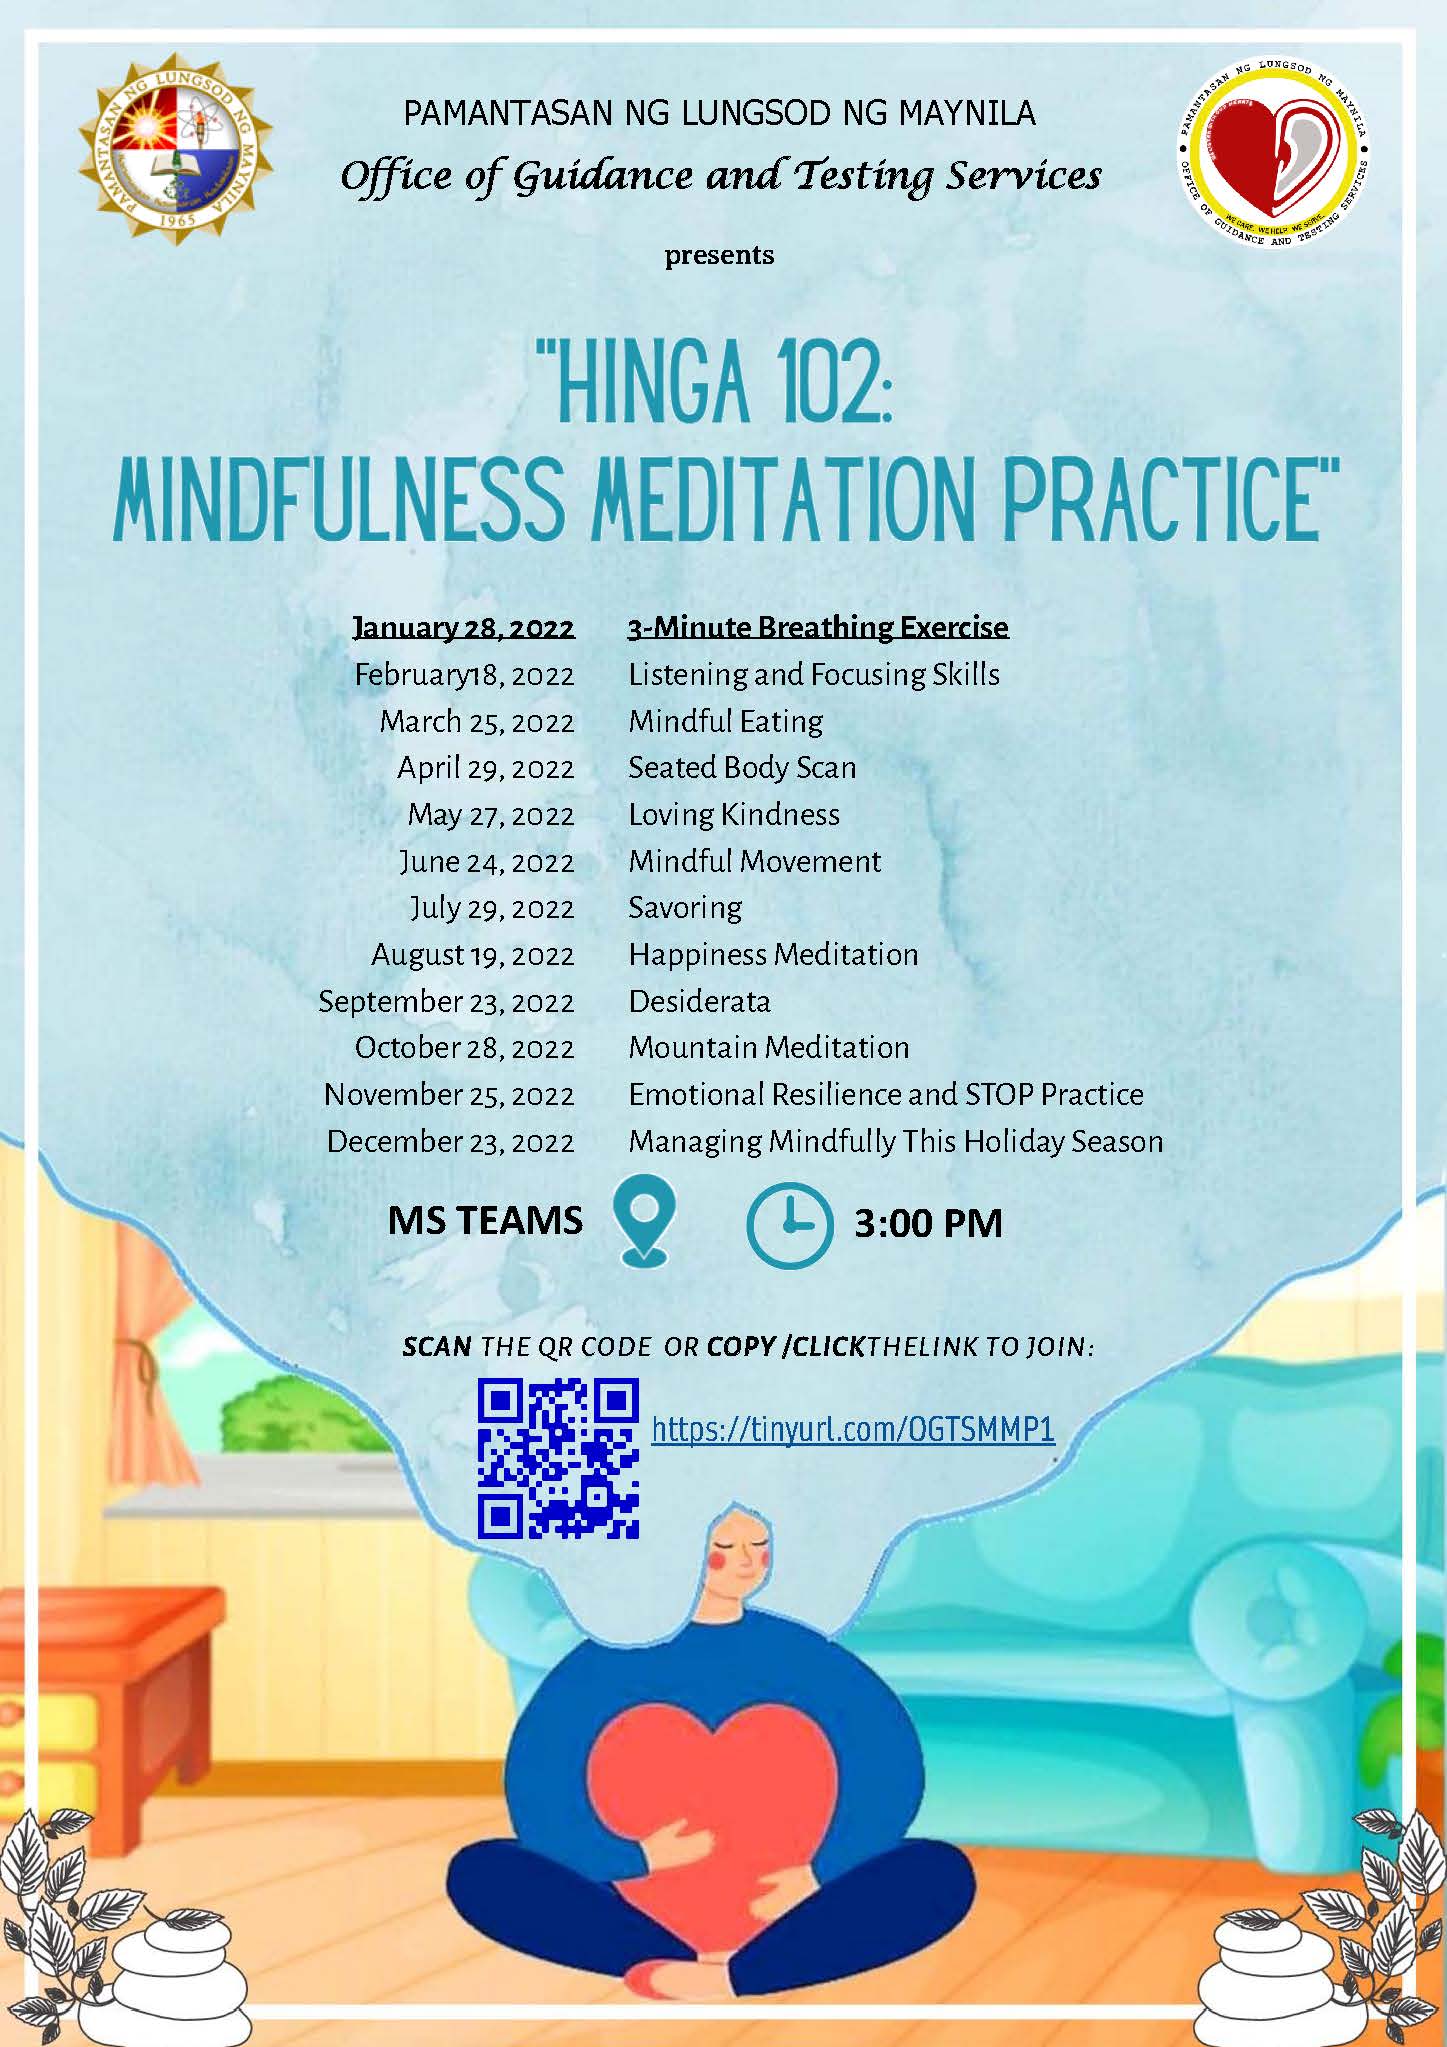 Join Hinga 102: Mindfulness Meditation sessions